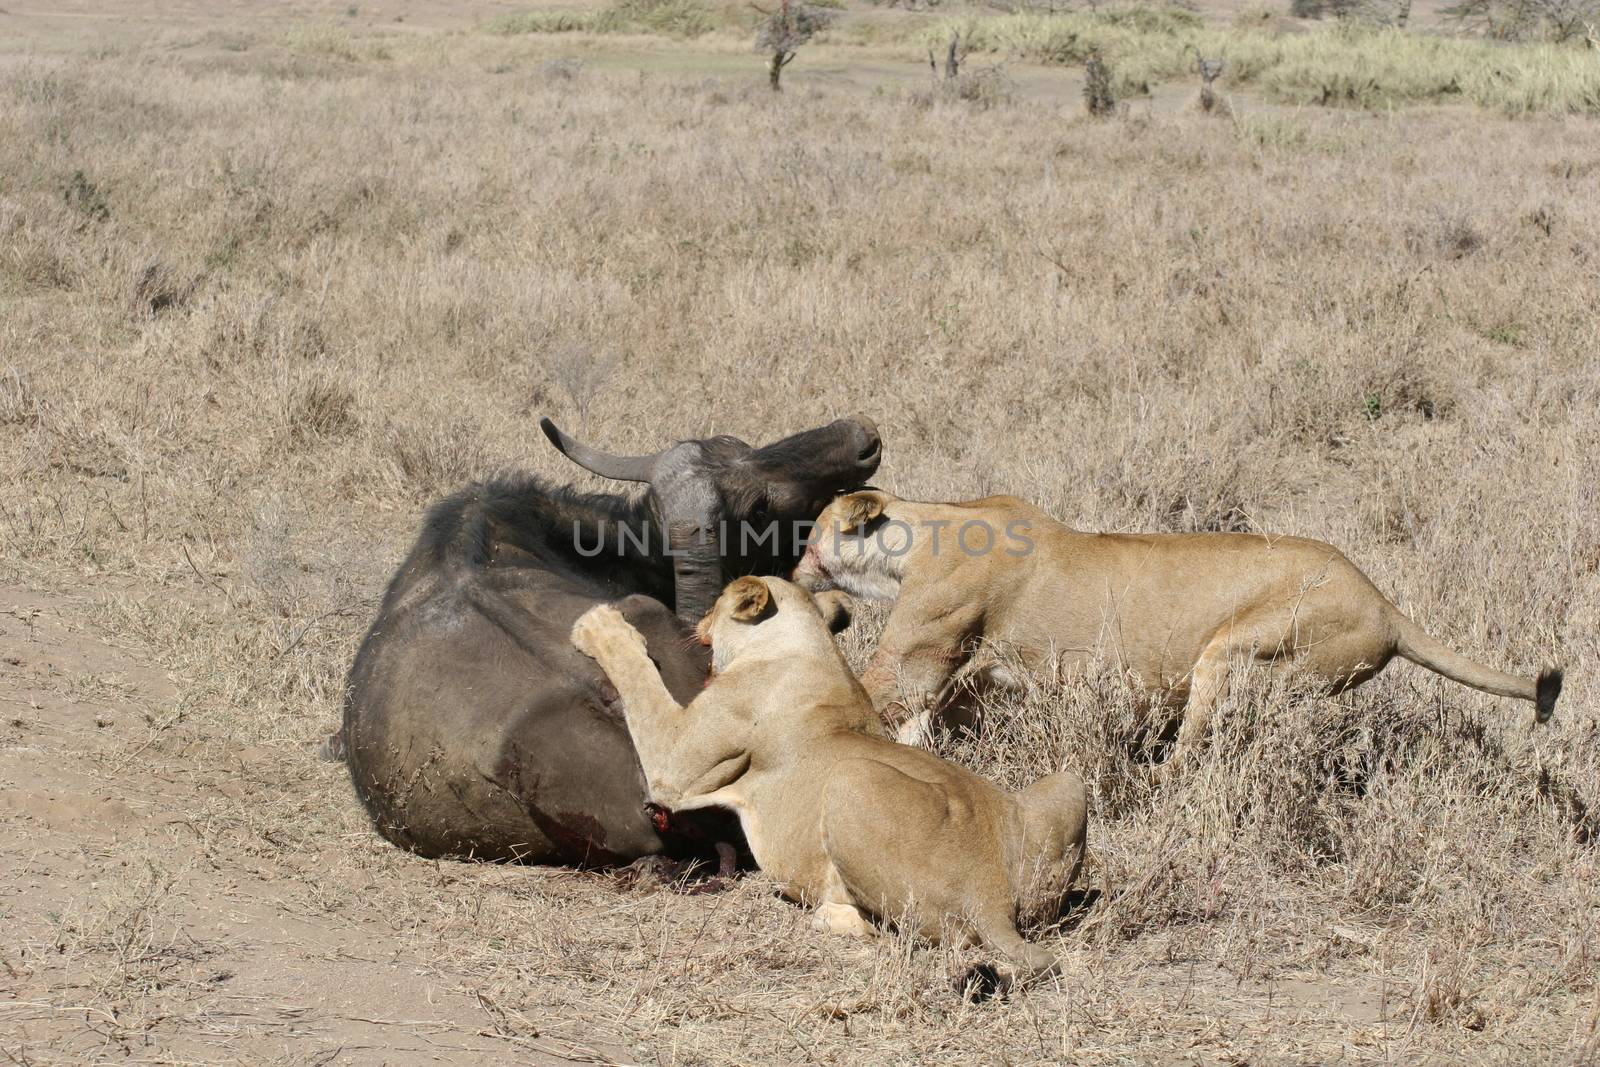 lion eating bull in blood after hunting wild dangerous mammal africa savannah Kenya